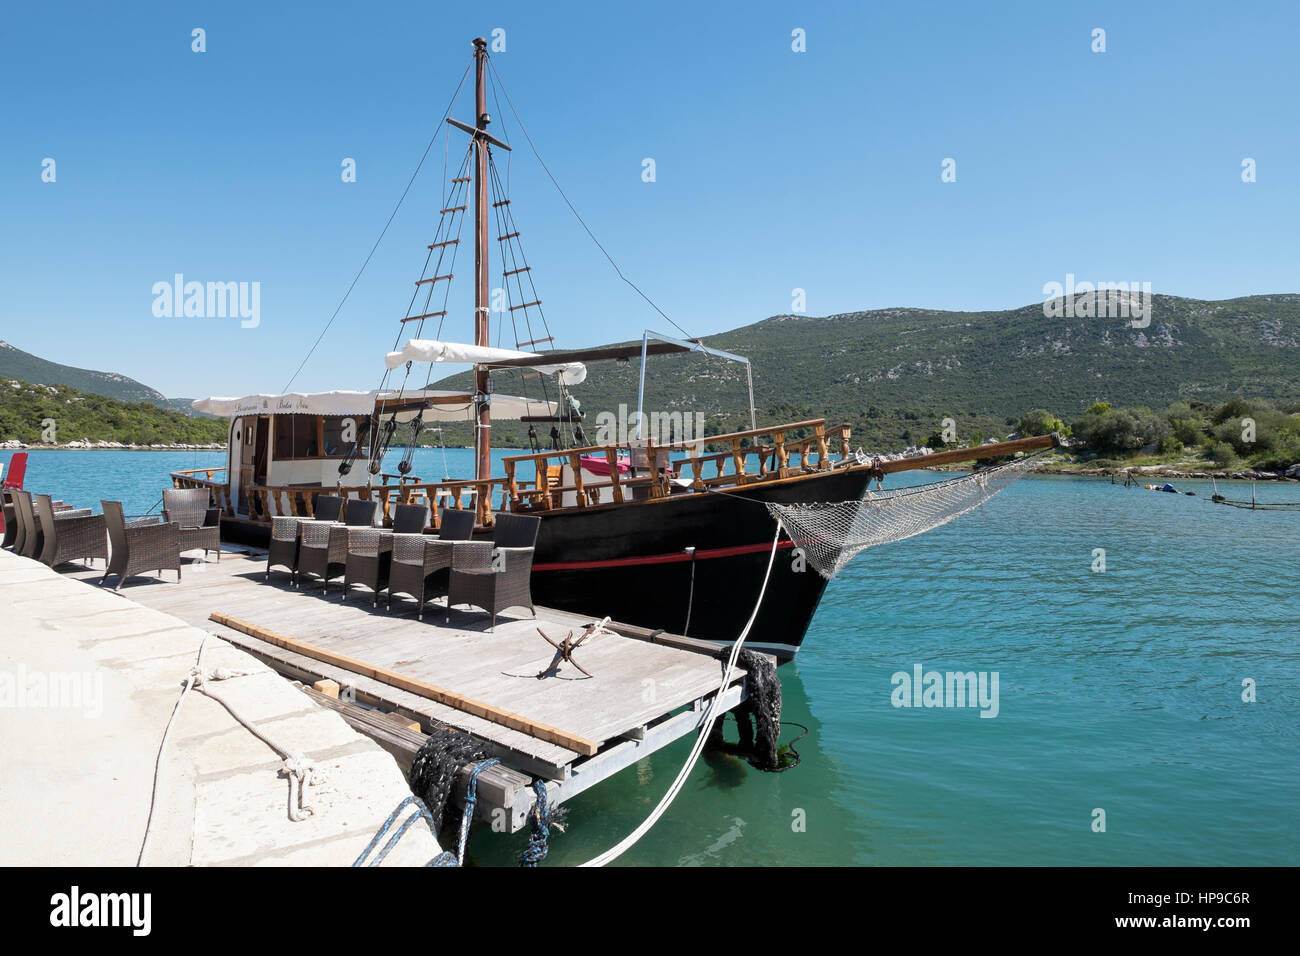 Festgemachten touristischen Boot, Mali Ston, Halbinsel Peljesac, Adria, Kroatien Stockfoto